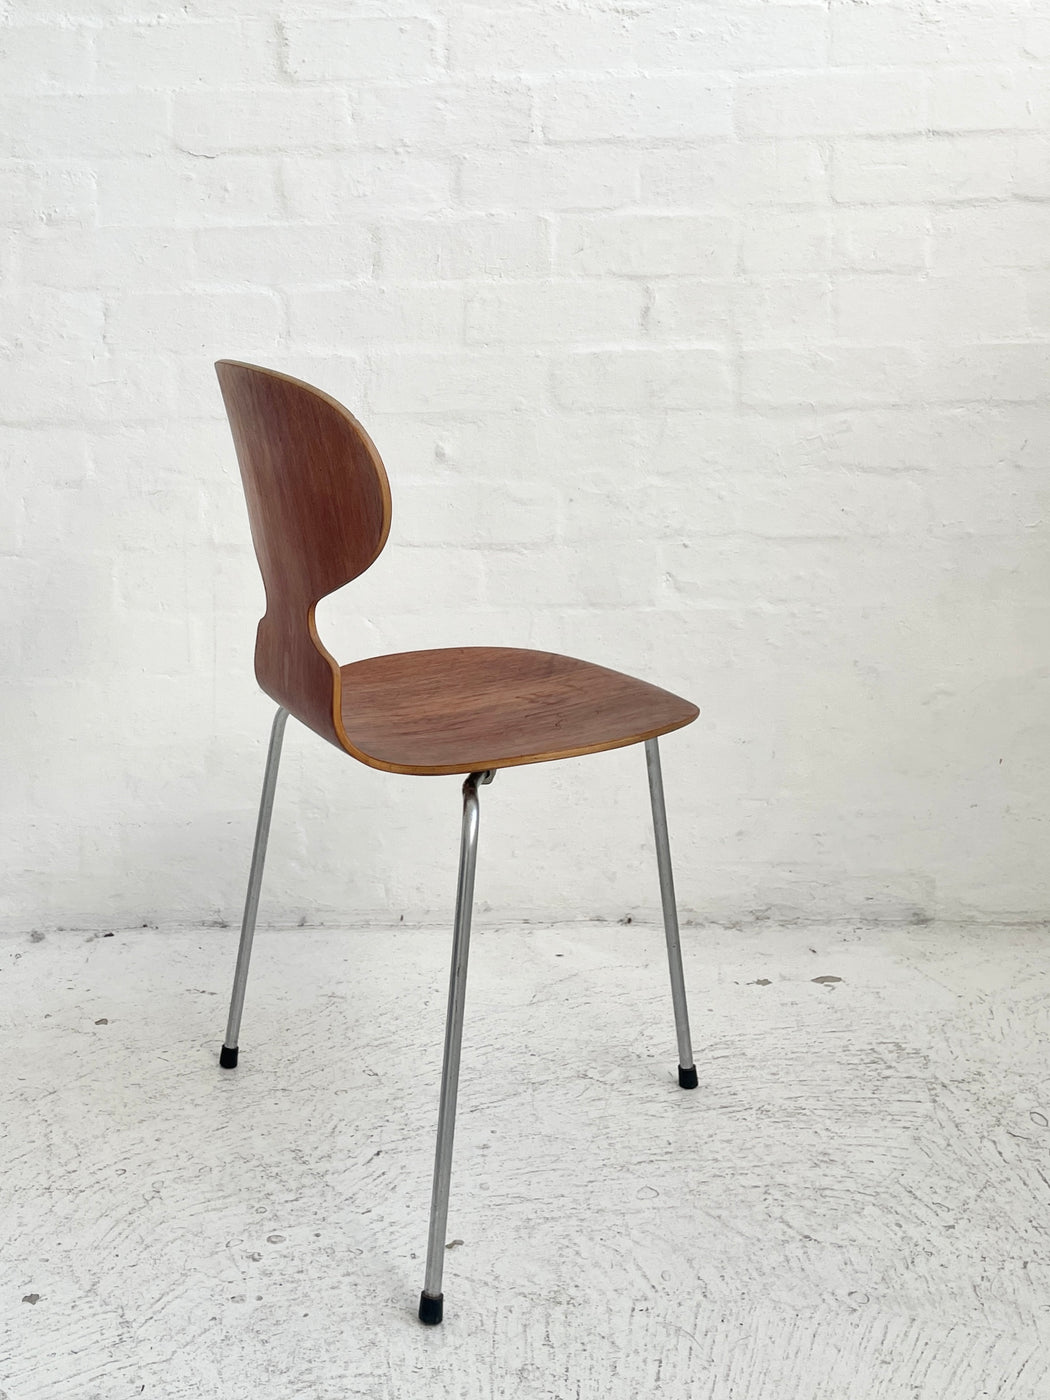 Arne Jacobsen 'Ant' Chair